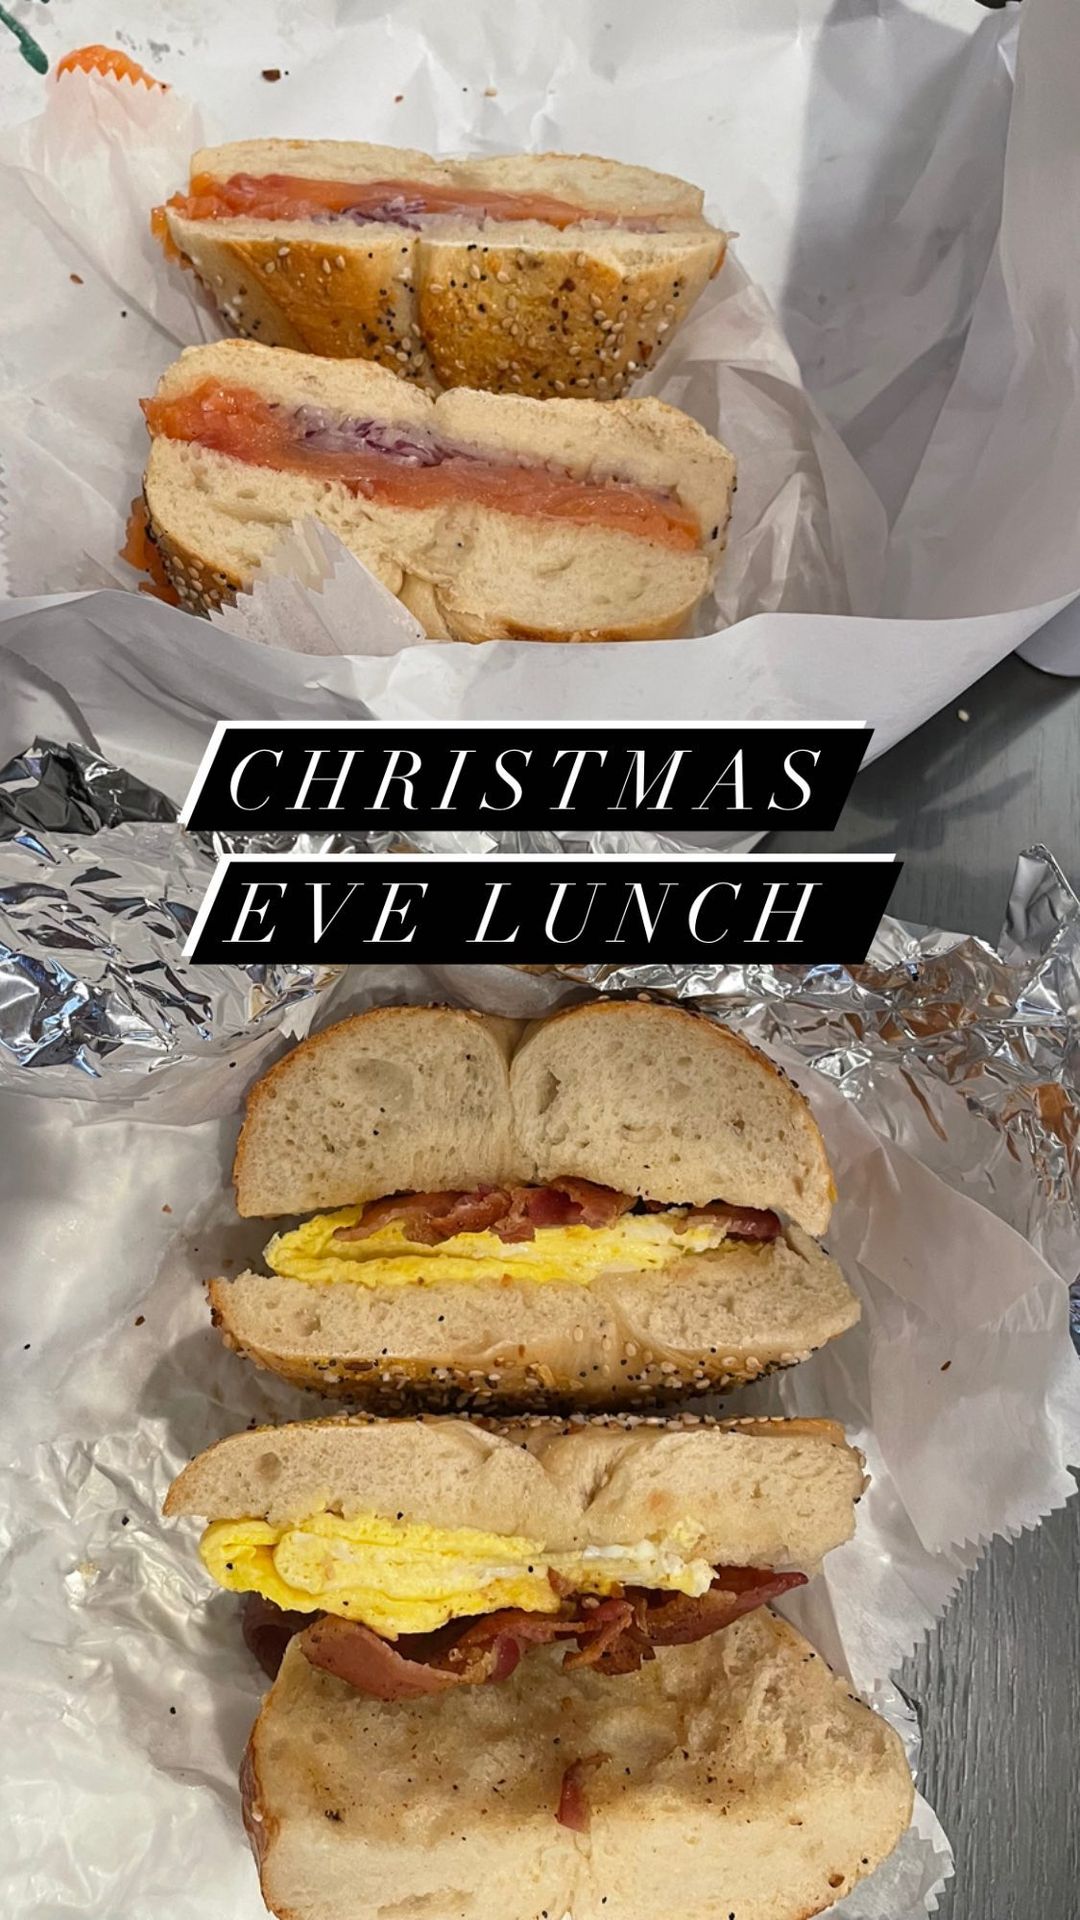 12-24 1 Christmas Eve lunch.jpg